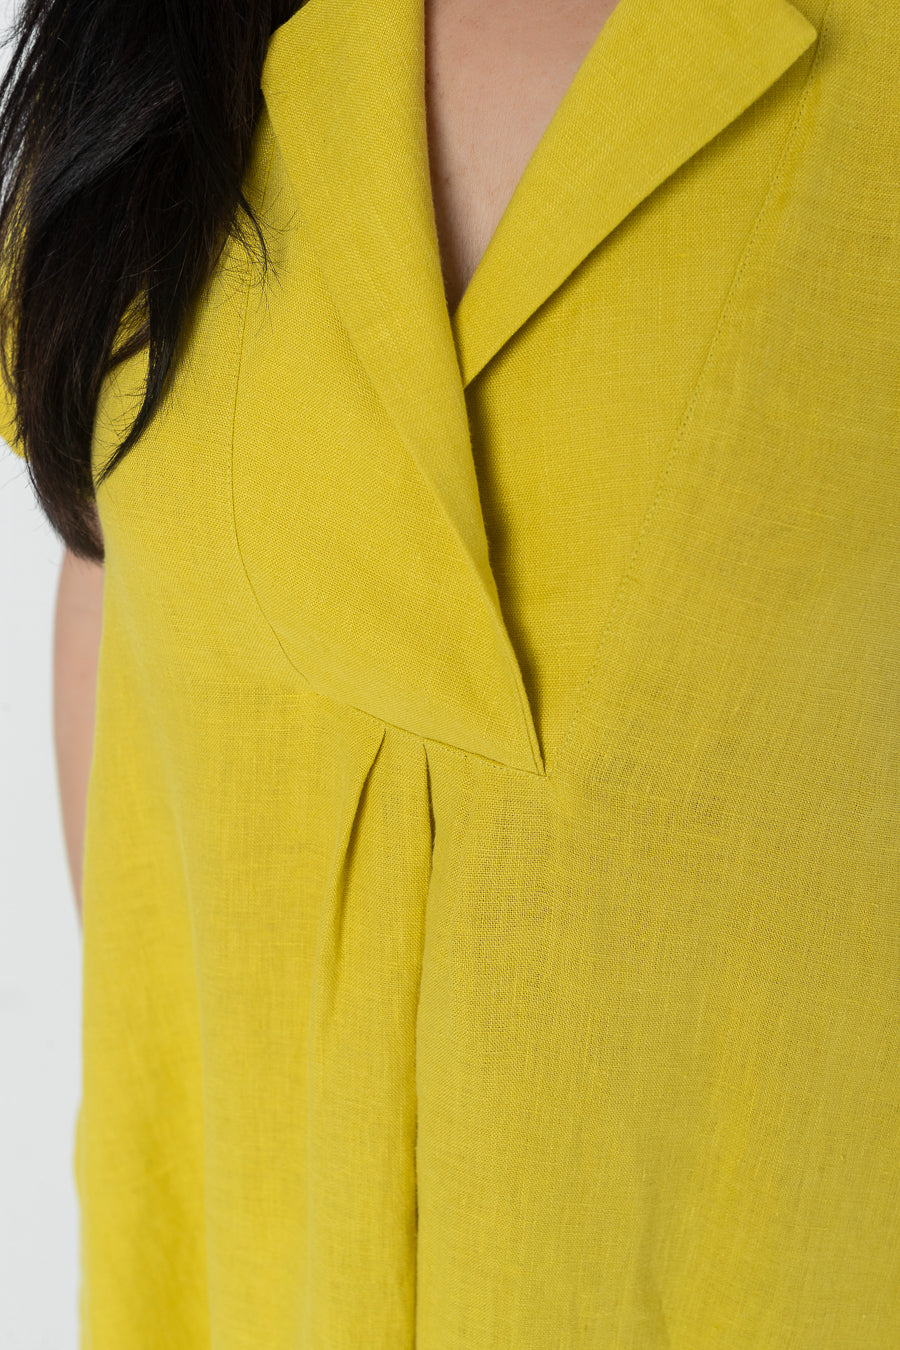 YUNA | Linen dress with pockets and collar - Mezzoroni